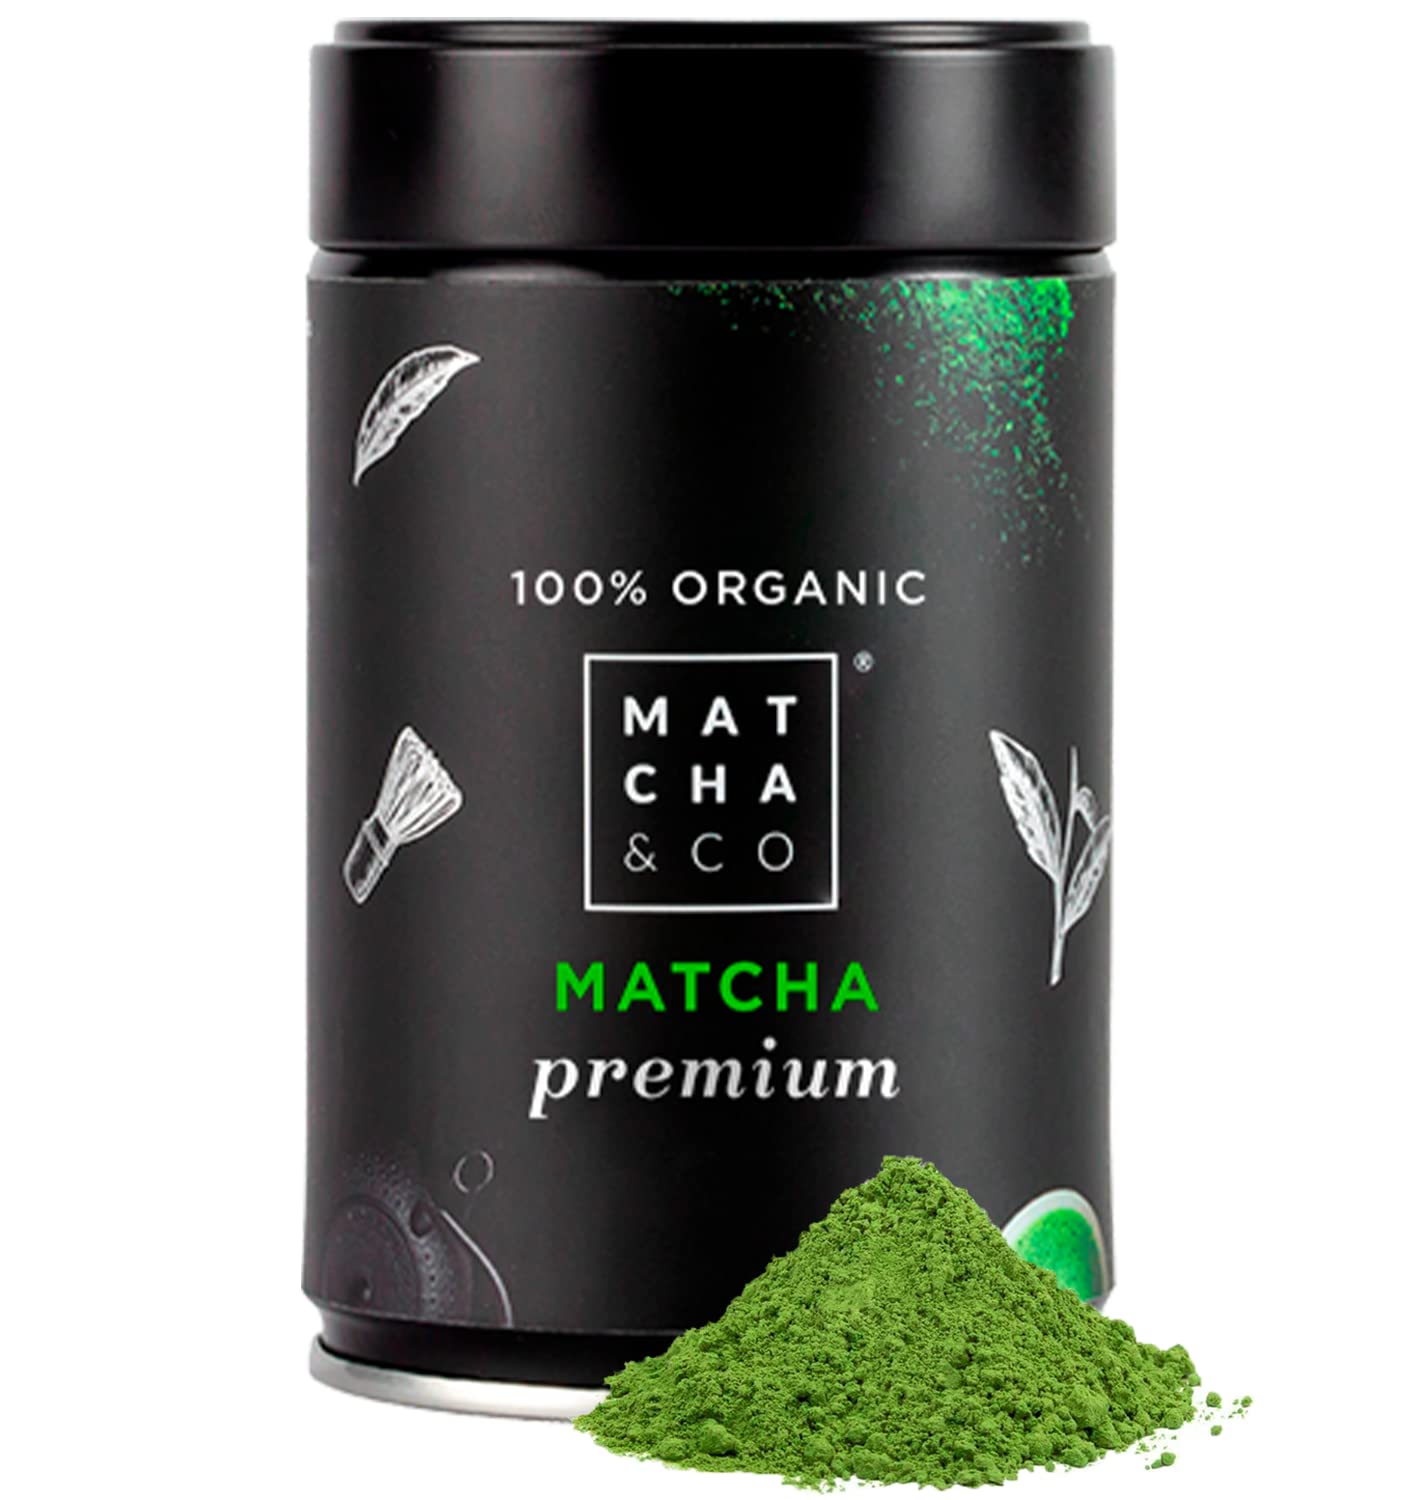 Ceremonial Grade-A Matcha: Japanese Green Tea Powder